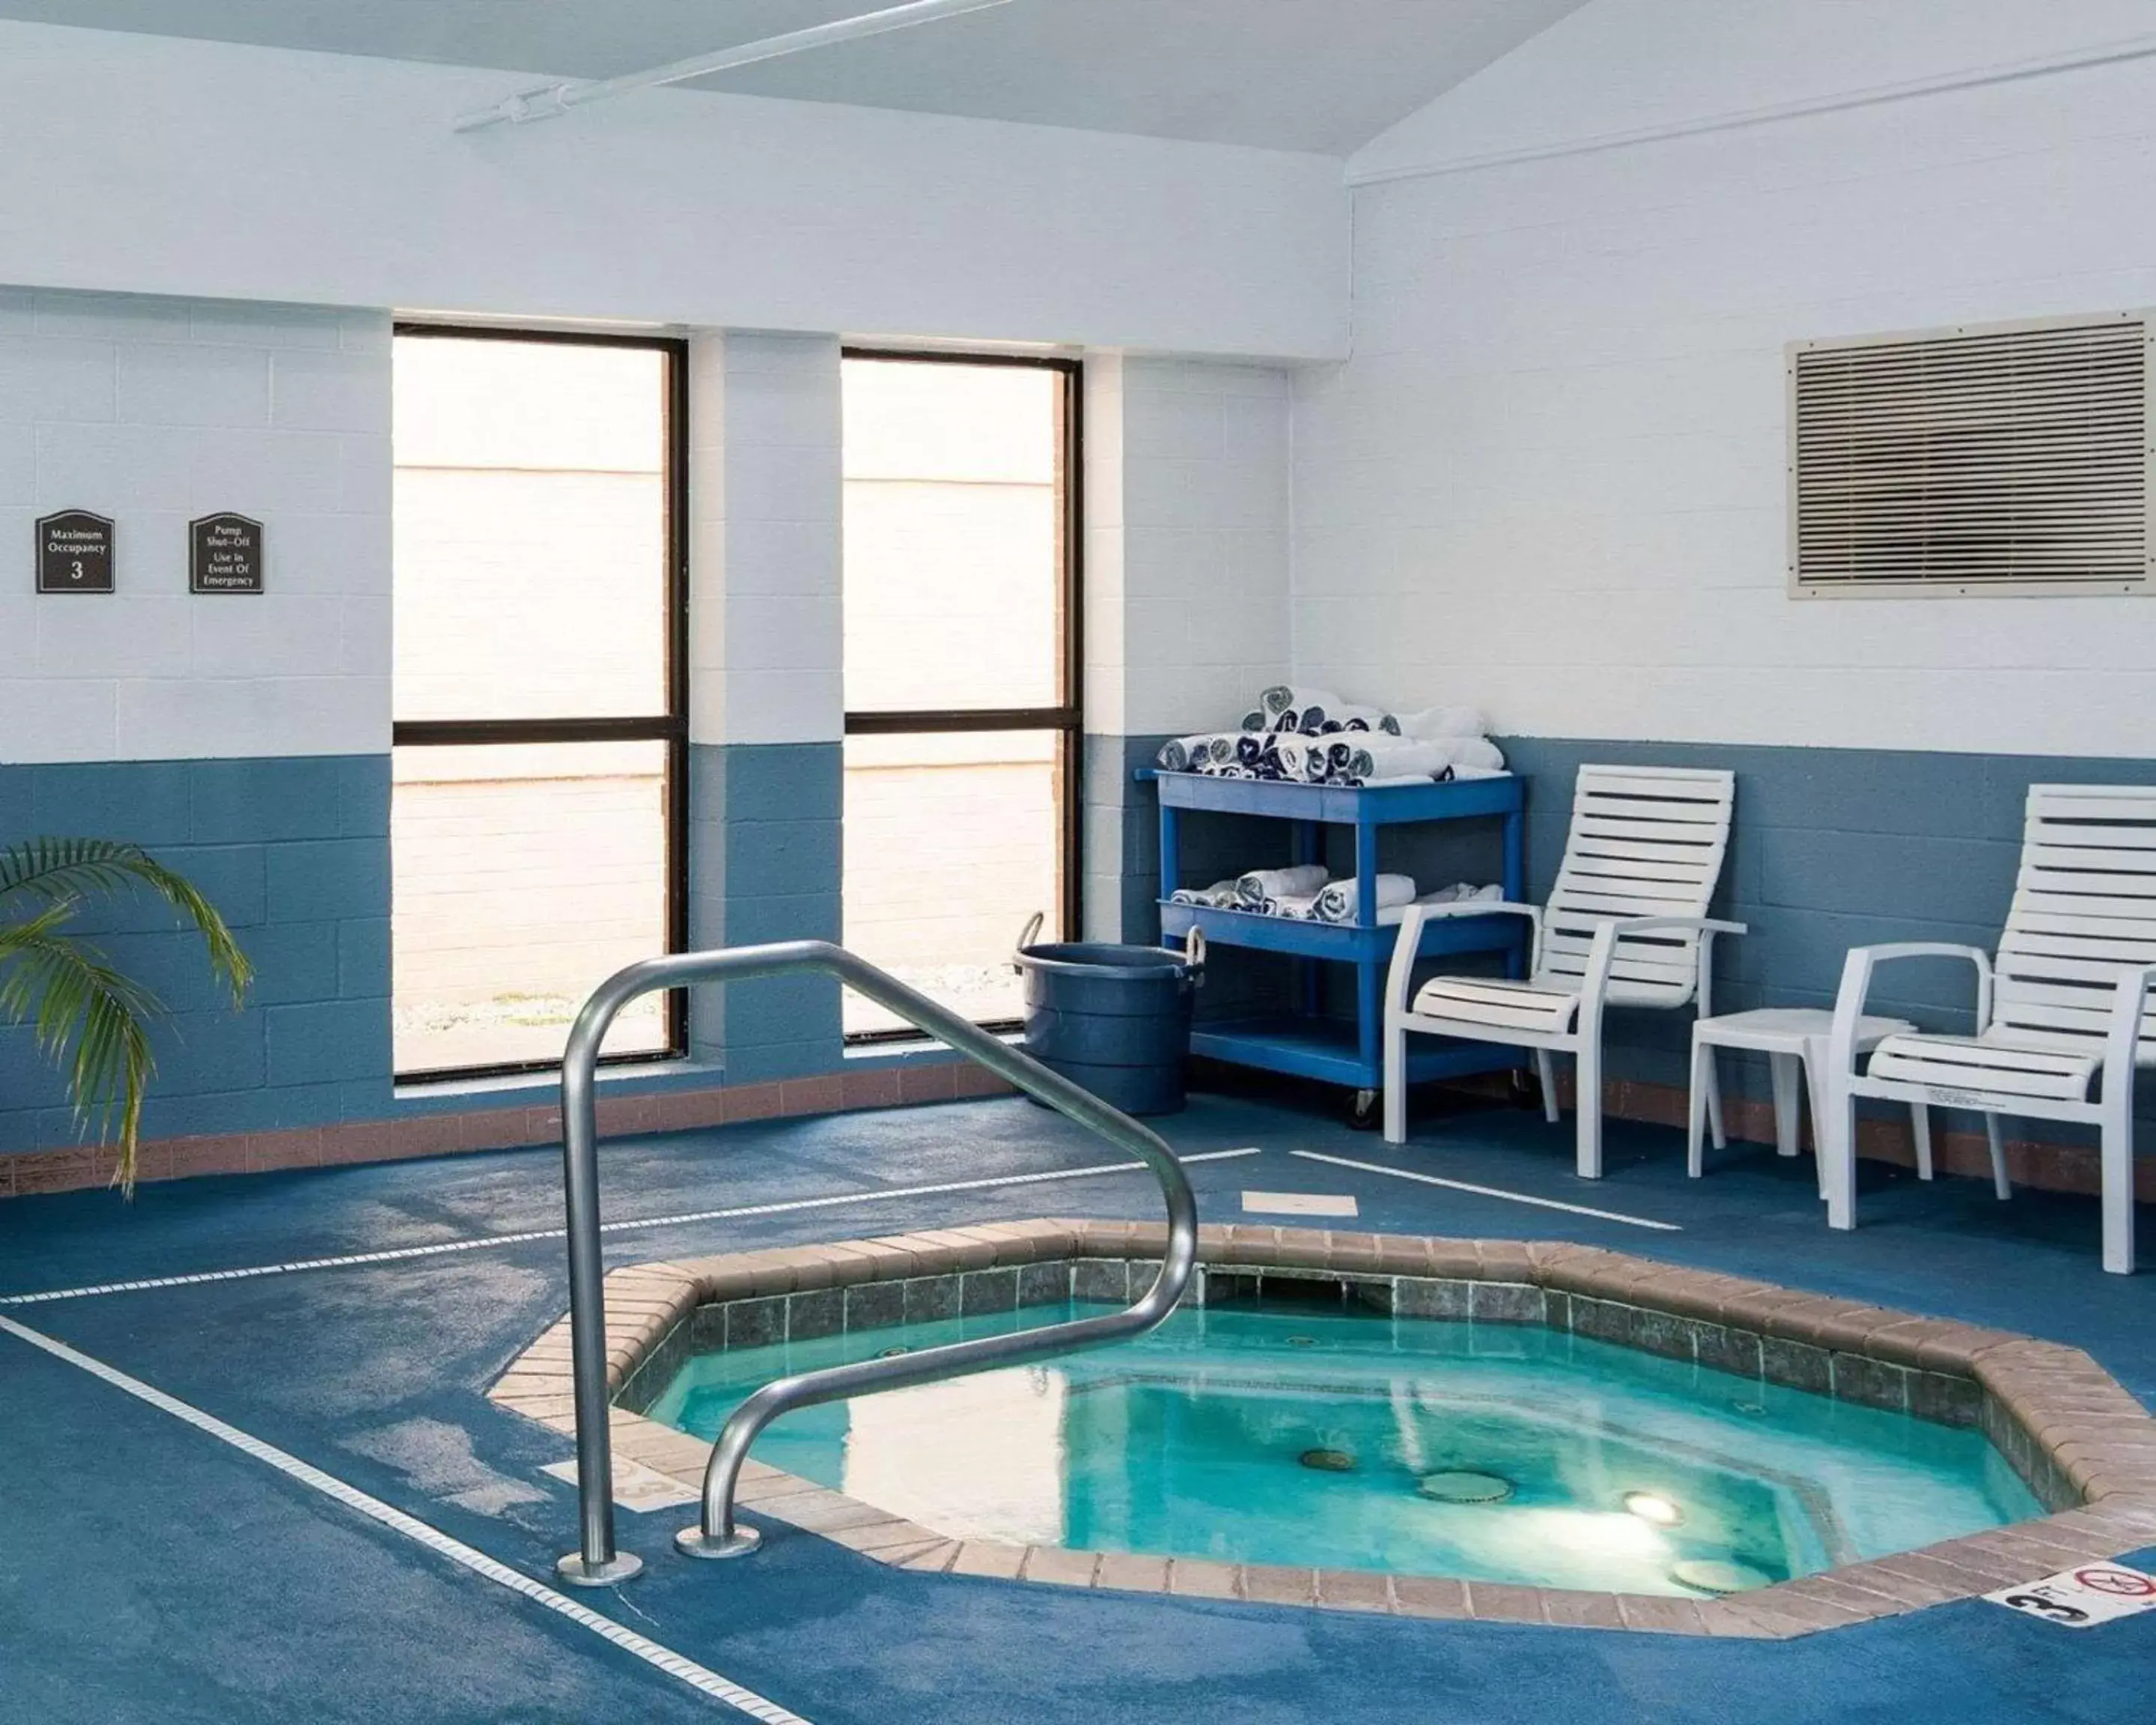 On site, Swimming Pool in Comfort Inn & Suites - LaVale - Cumberland